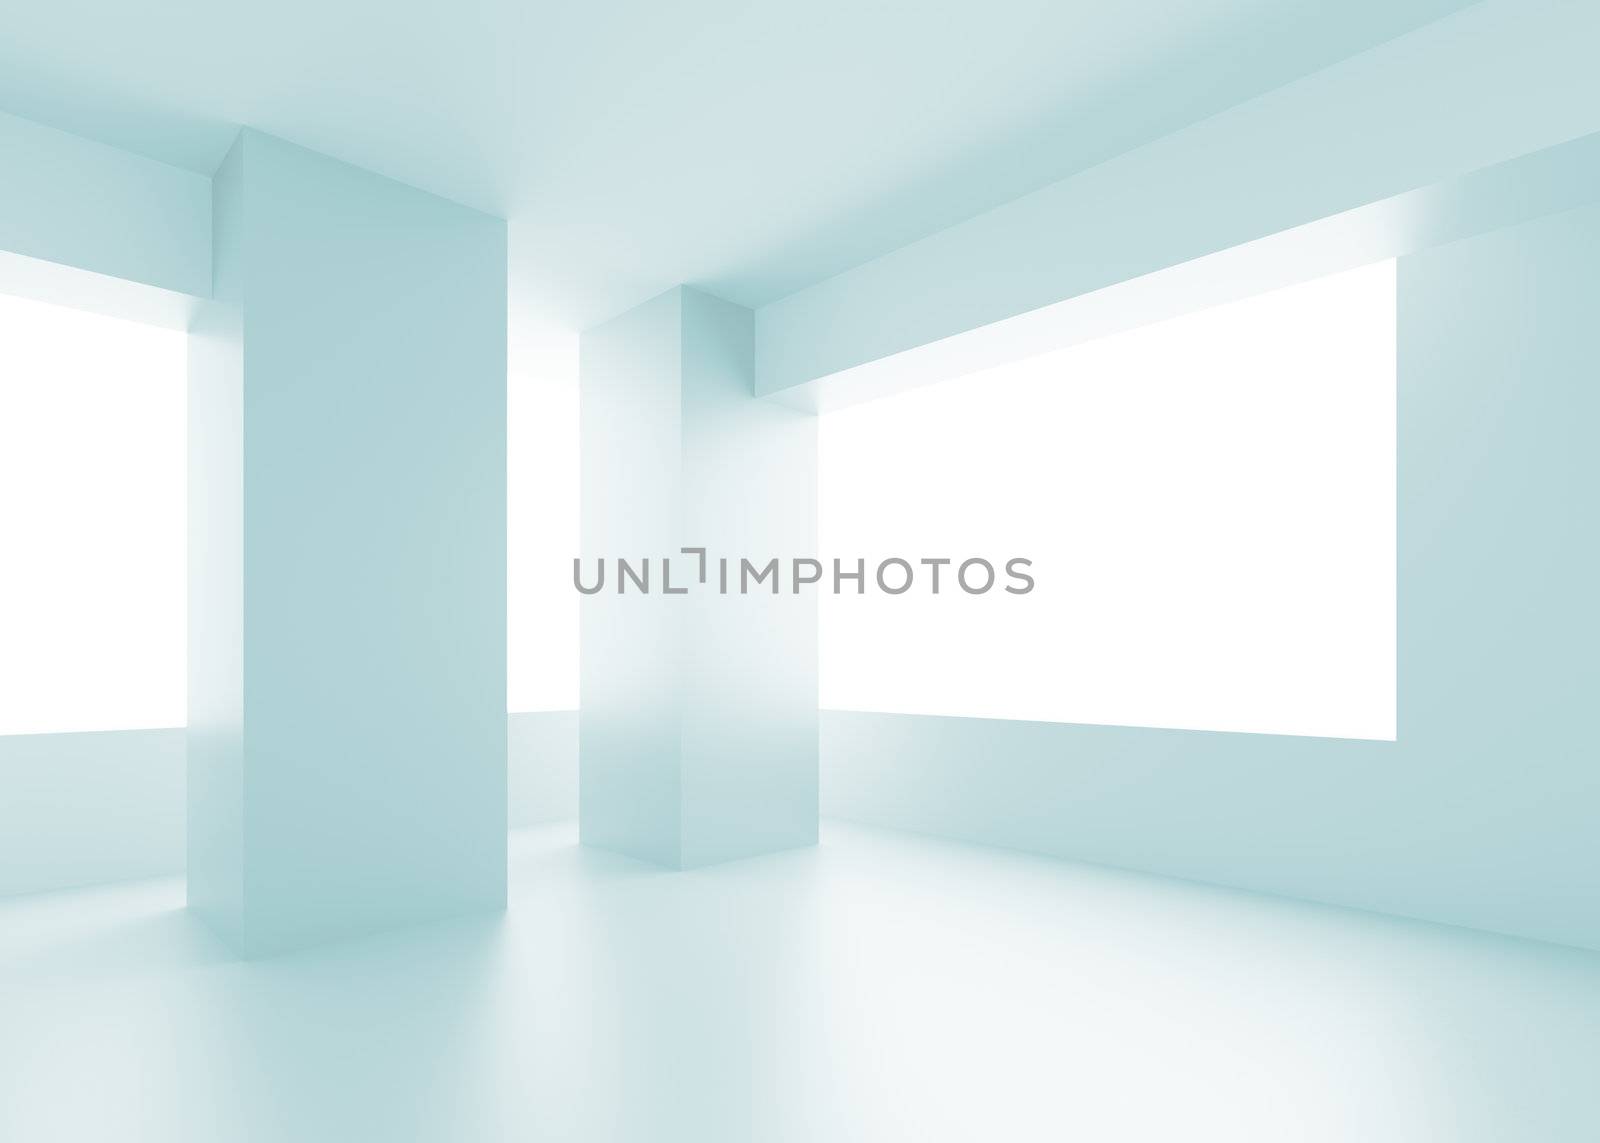 3d Illustration of White Empty Room